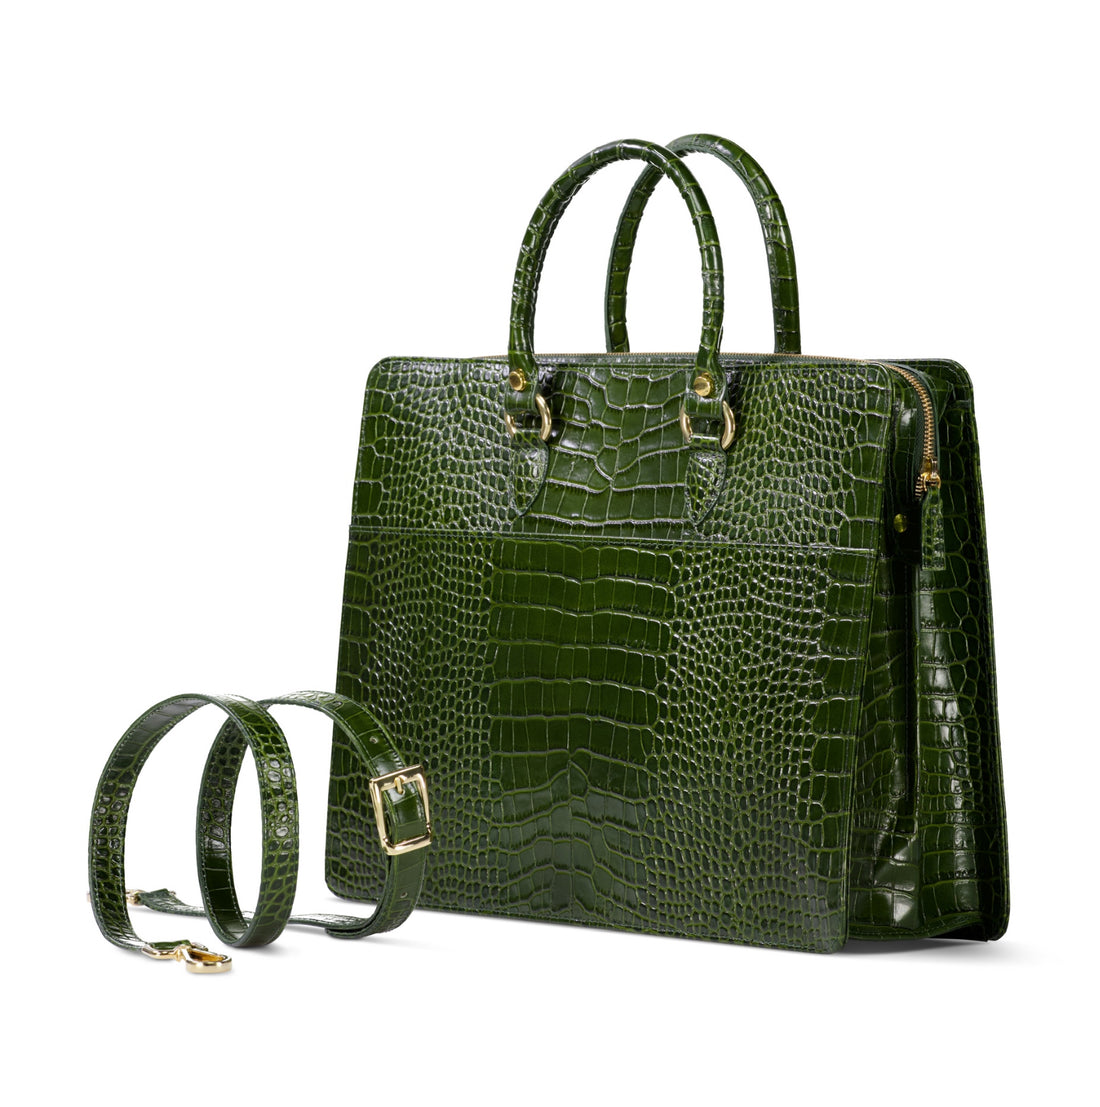 The Luna Briefcase - Khaki Green - Bags by Urbbana